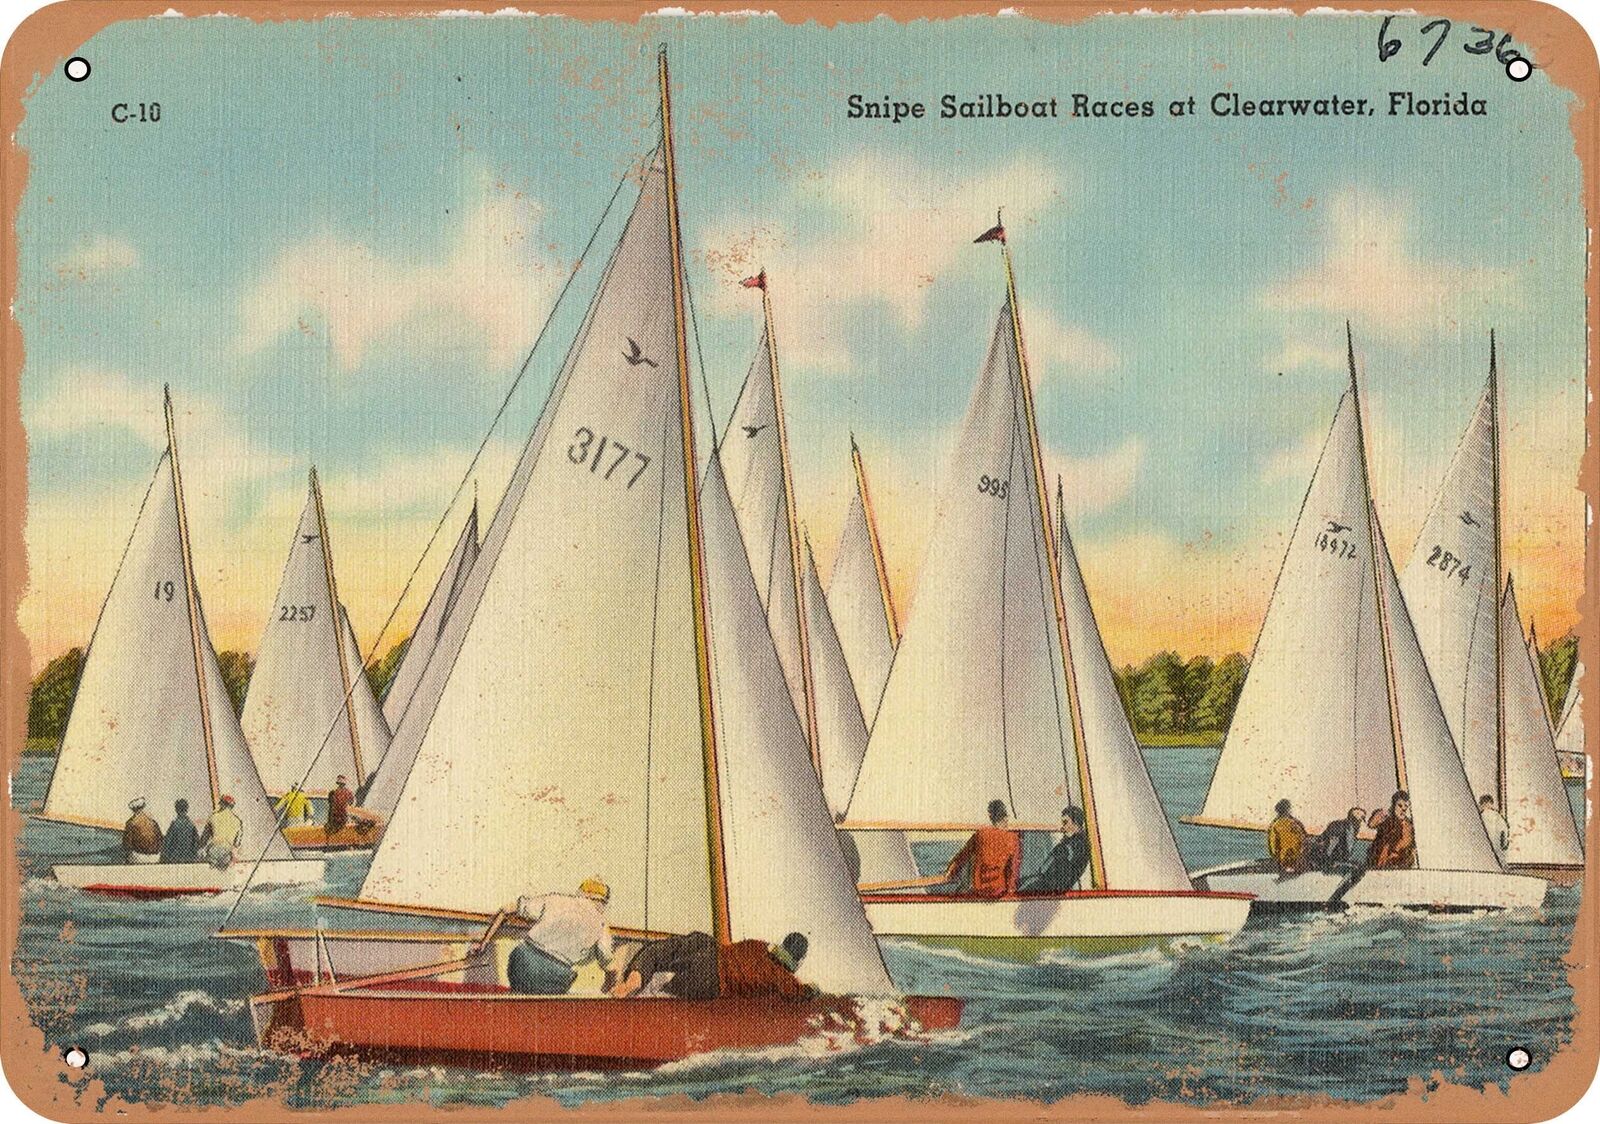 Metal Sign - Florida Postcard - Snipe sailboat races at Clearwater, Florida